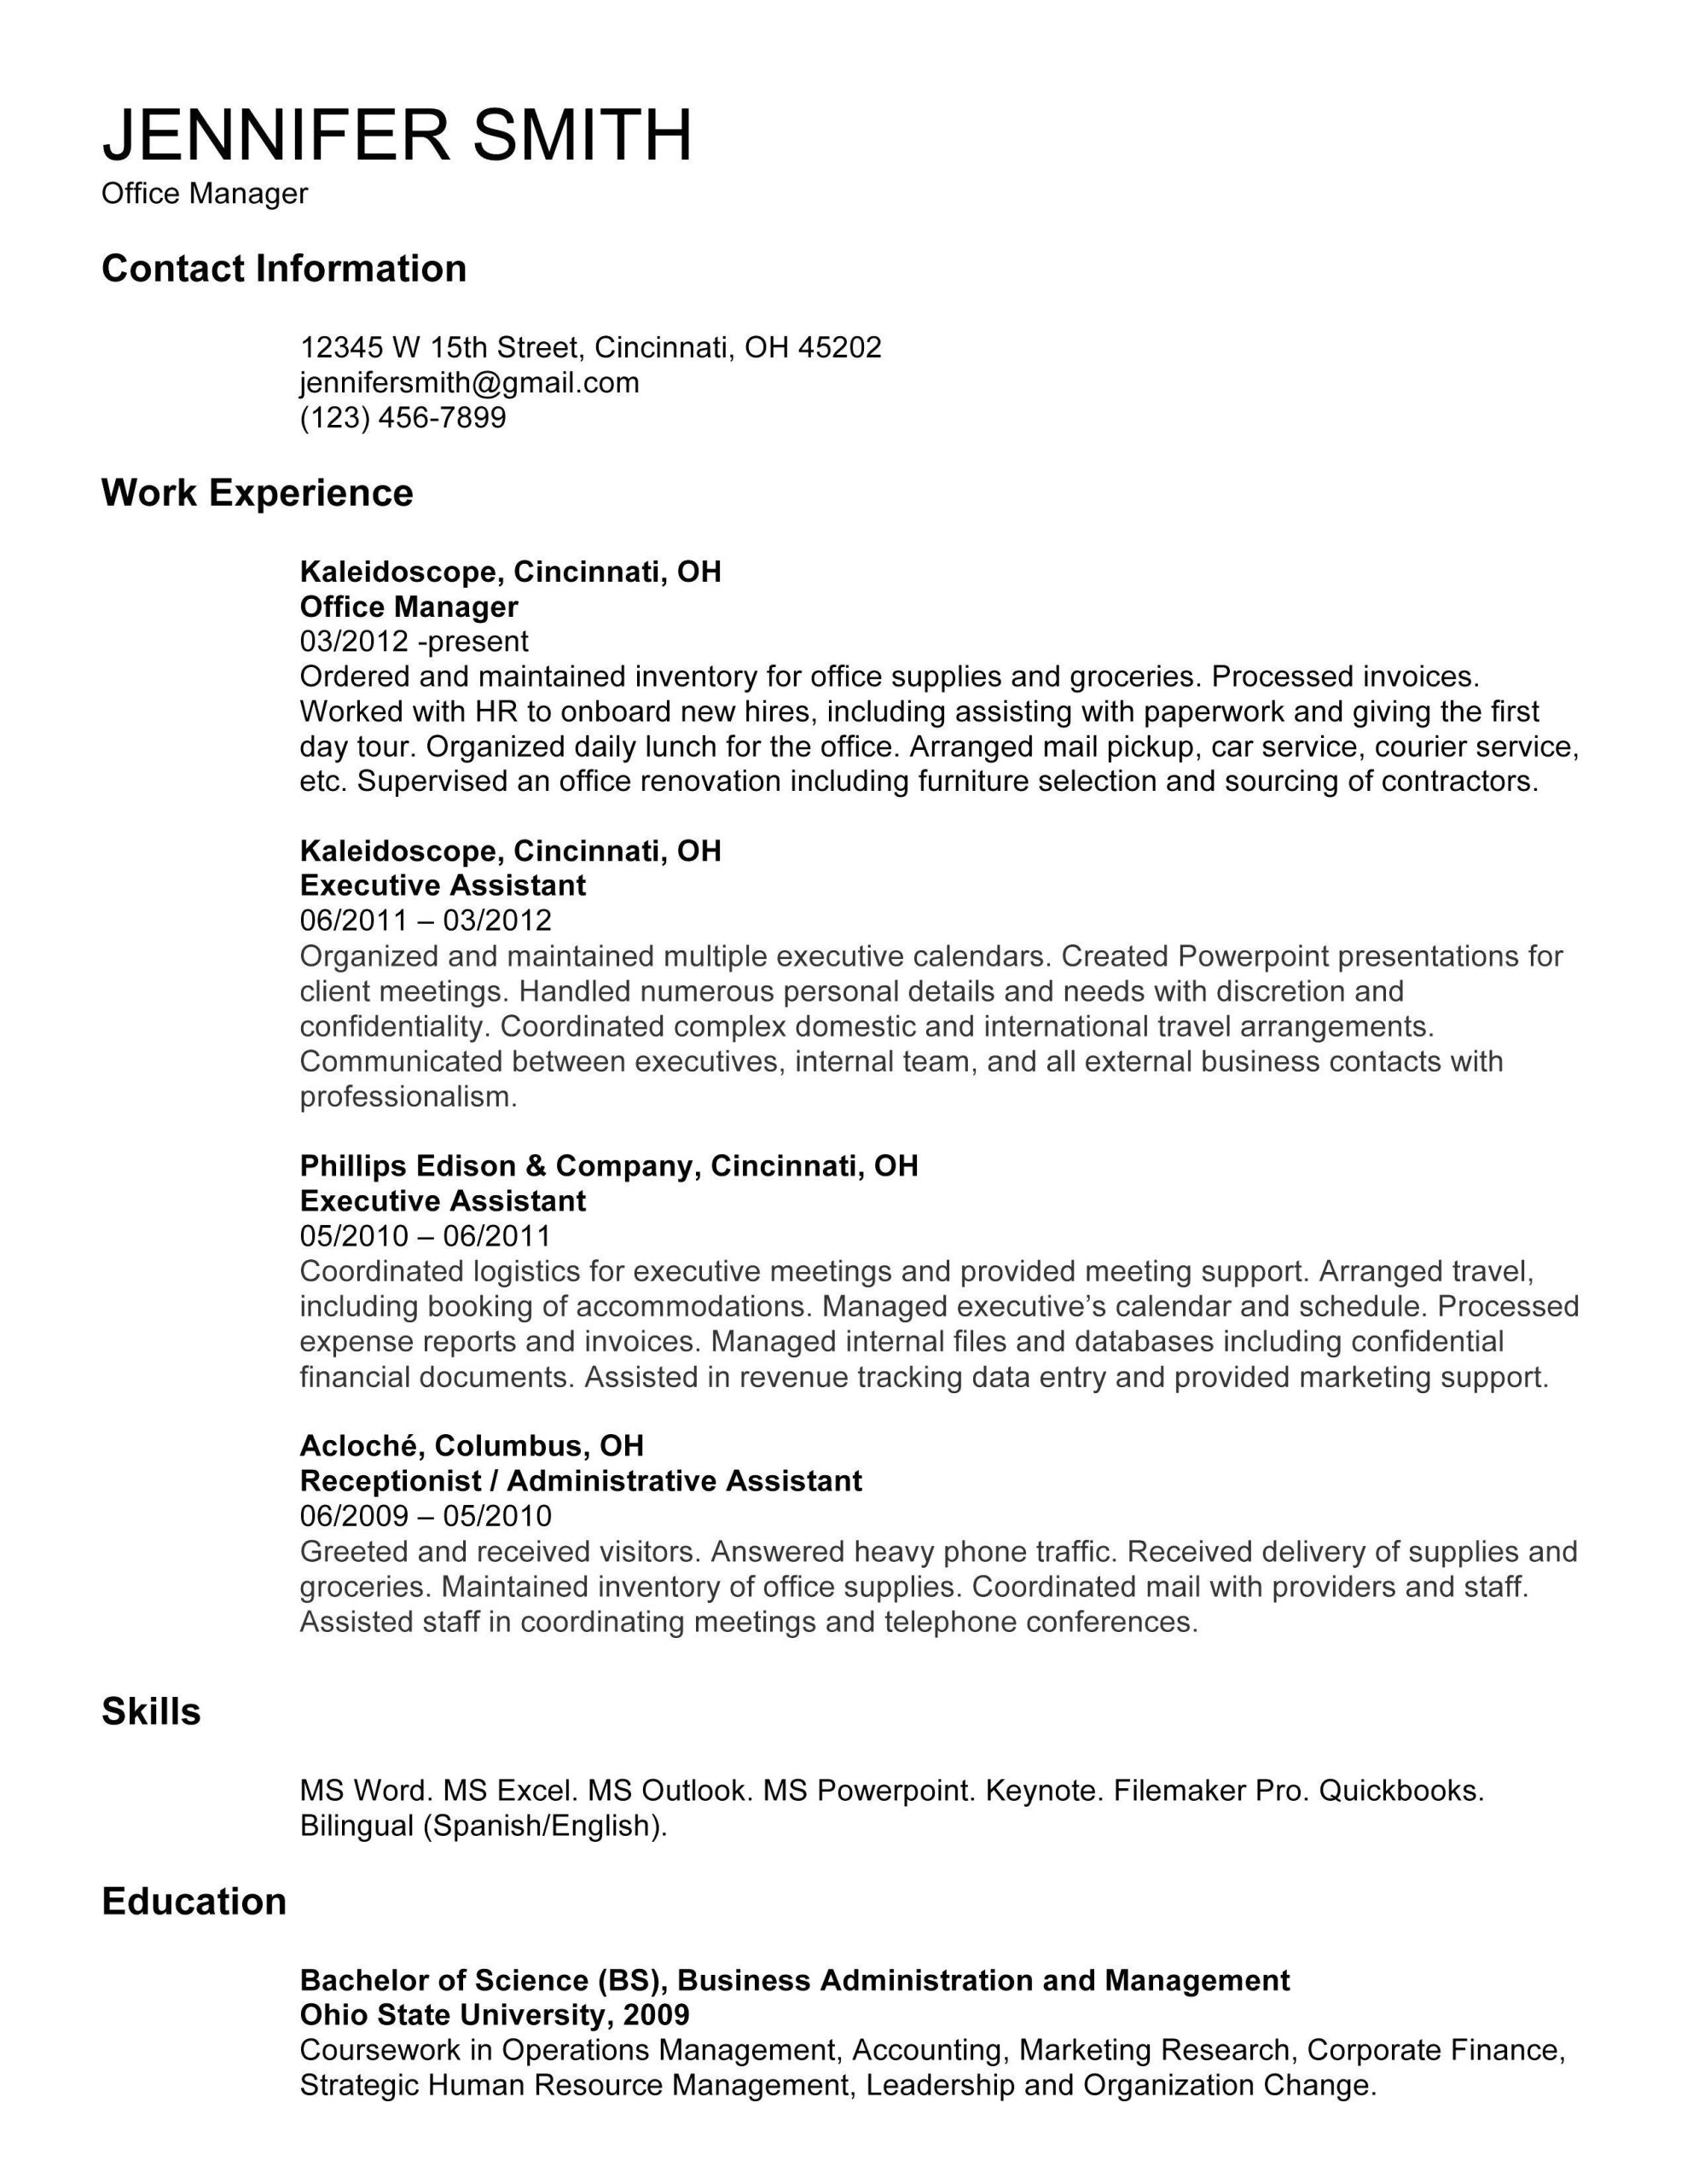 resume multiple positions held in same panyml